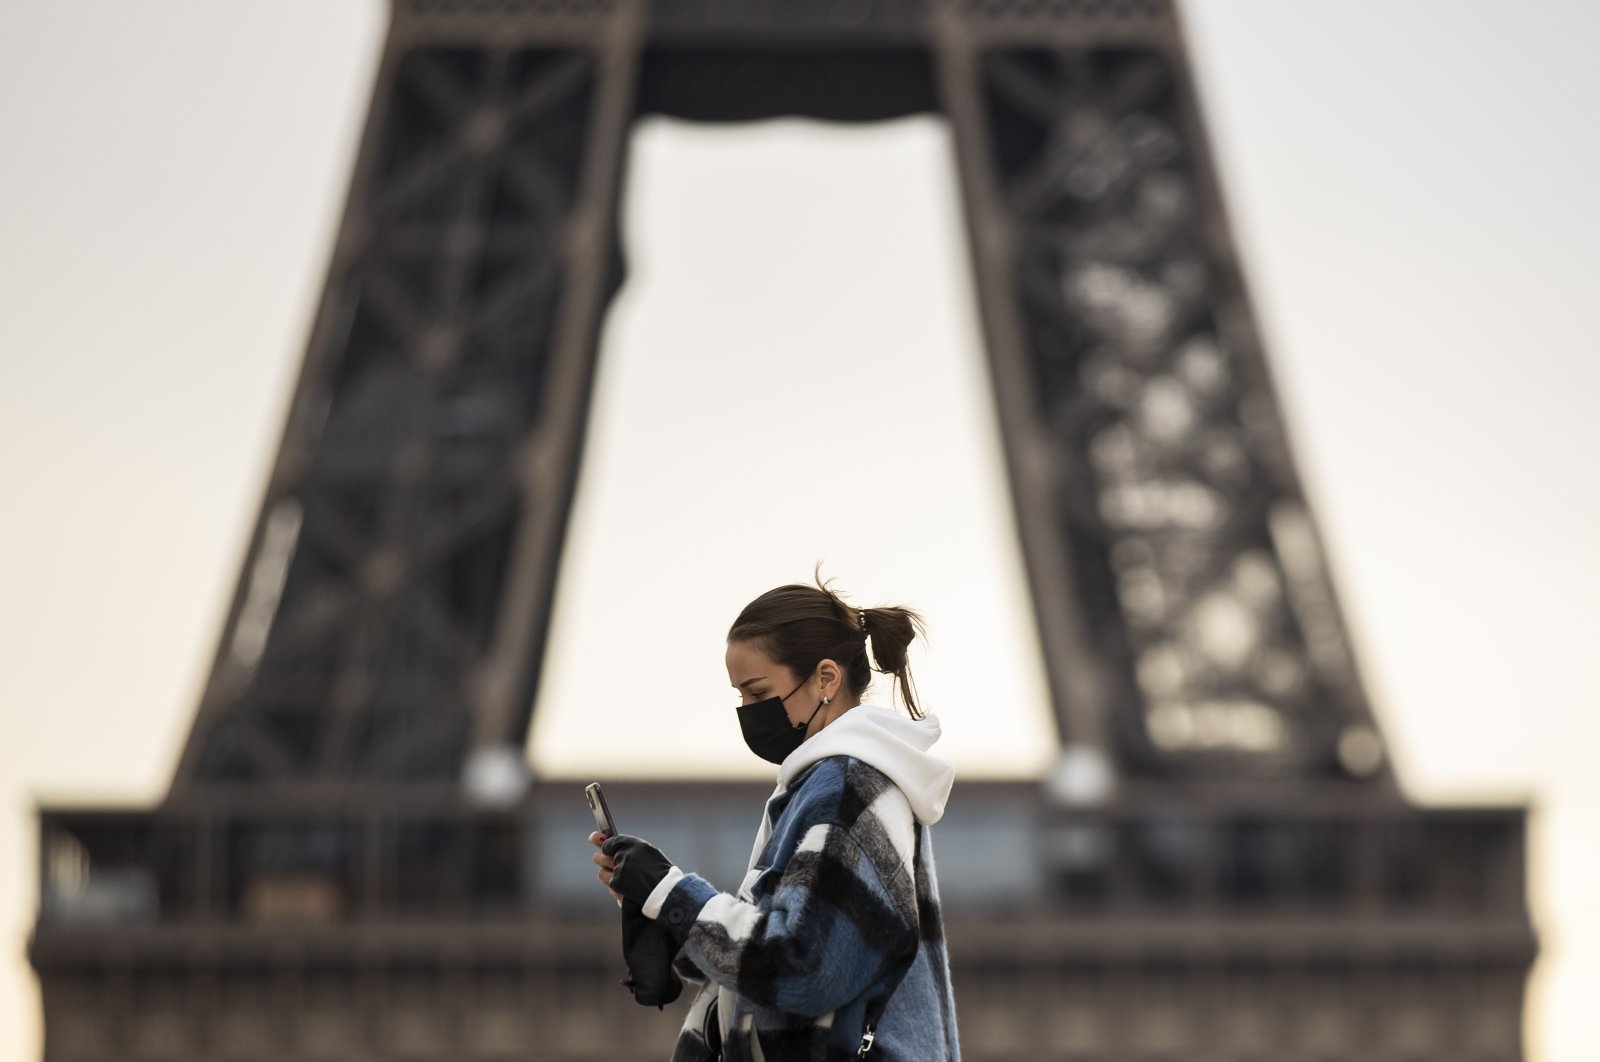 A pedestrian wearing a protective mask walks near the Eiffel Tower in Paris, France, Jan. 26, 2021. (EPA Photo)